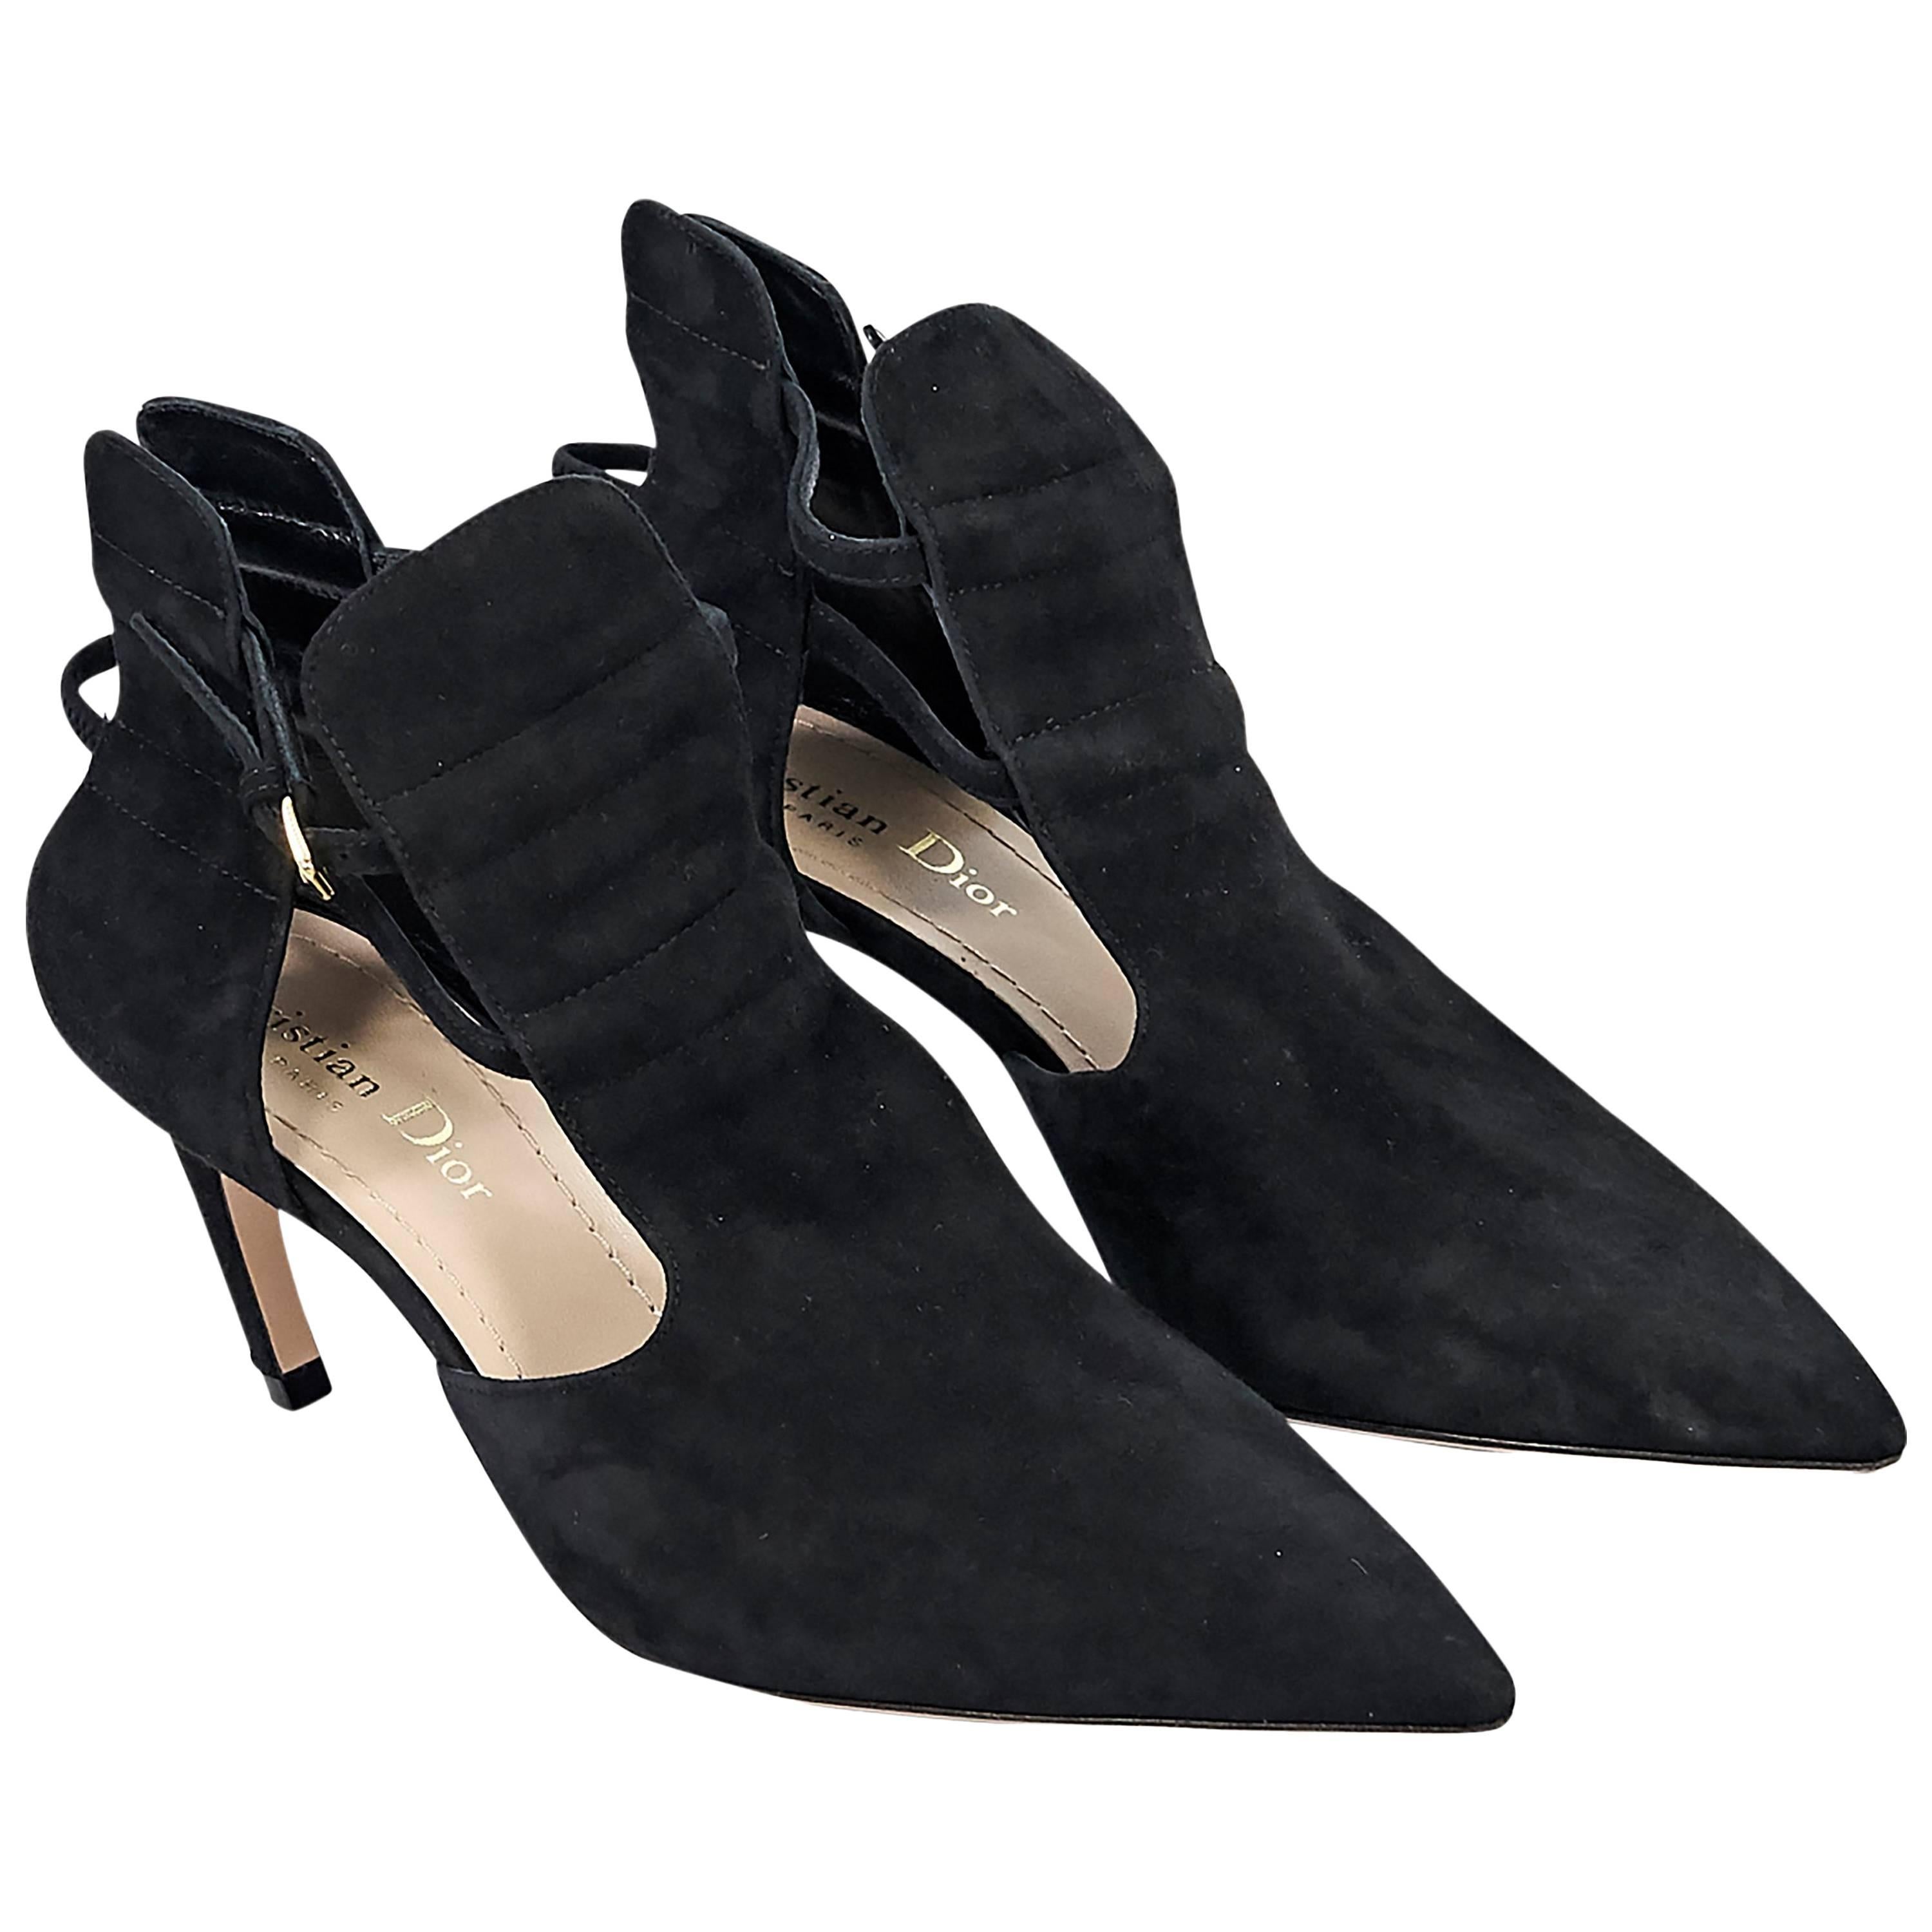 Christian Dior Black Suede Kitten Heels